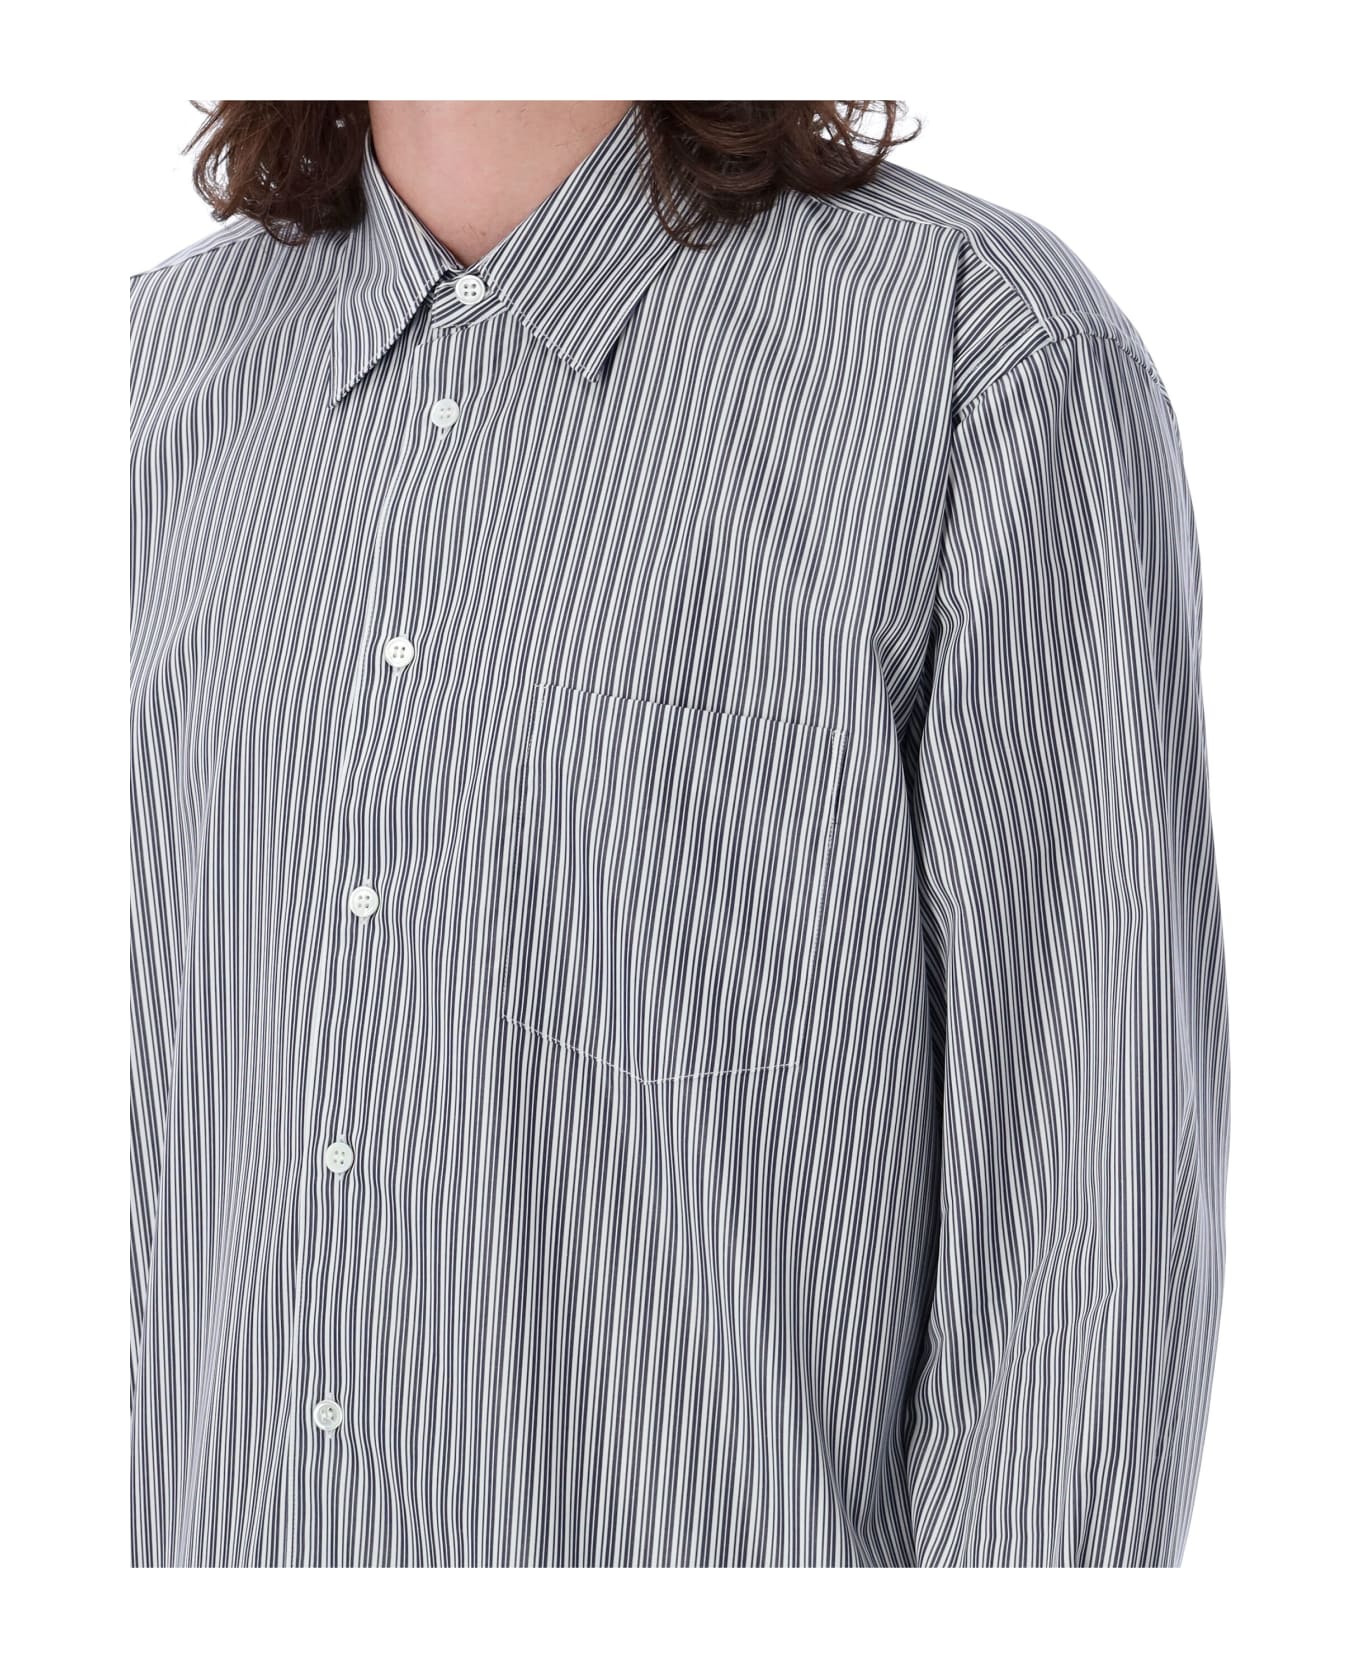 Comme des Garçons Shirt Stripes Shirt - STRIPE 4/GREY